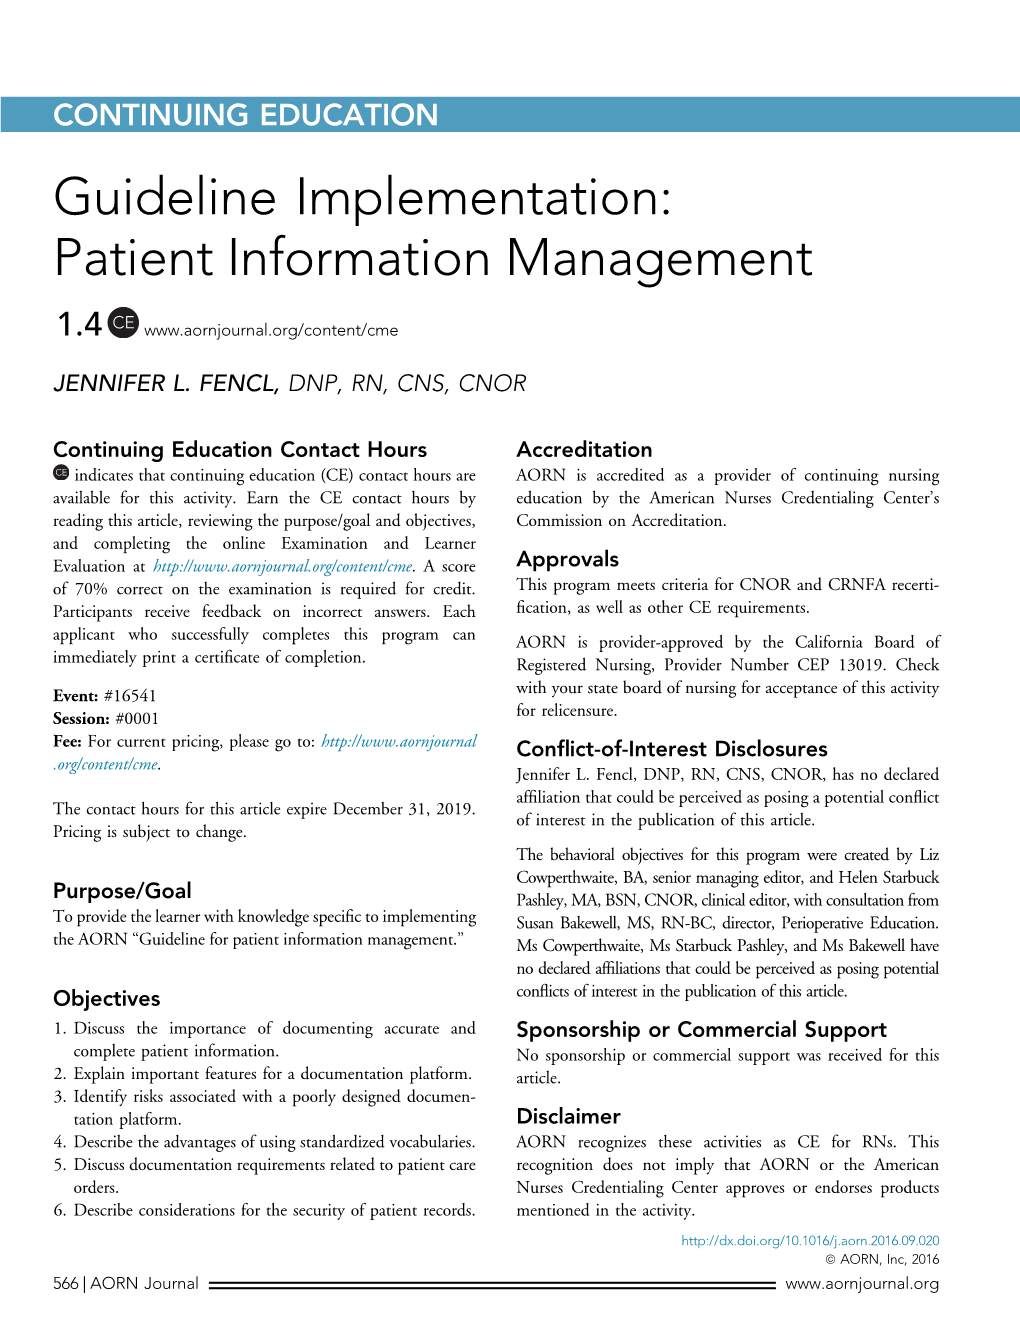 Guideline Implementation: Patient Information Management